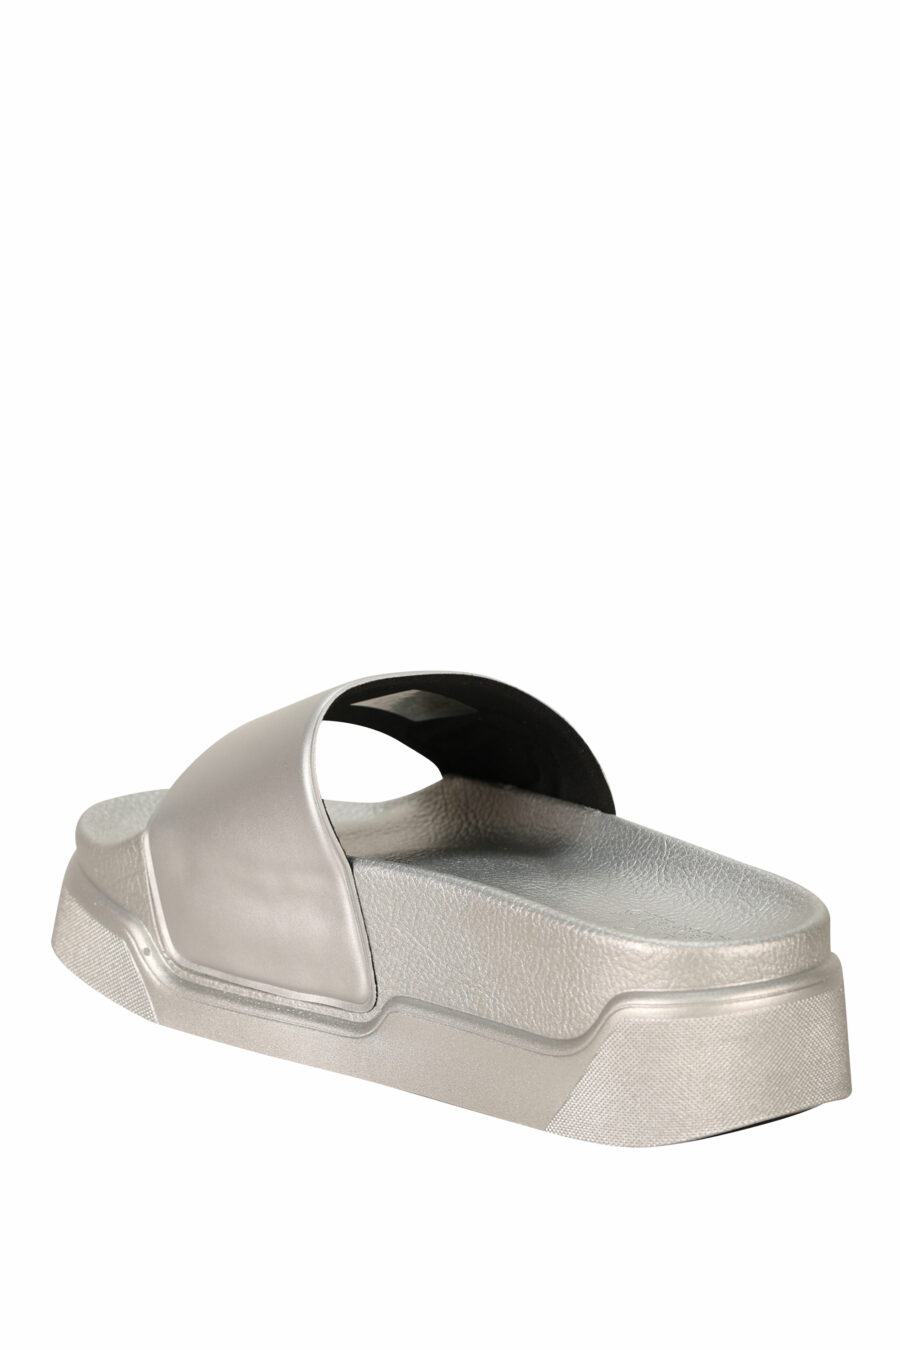 Sandales à plateforme argentées avec logo "karl" - 5059529404849 3